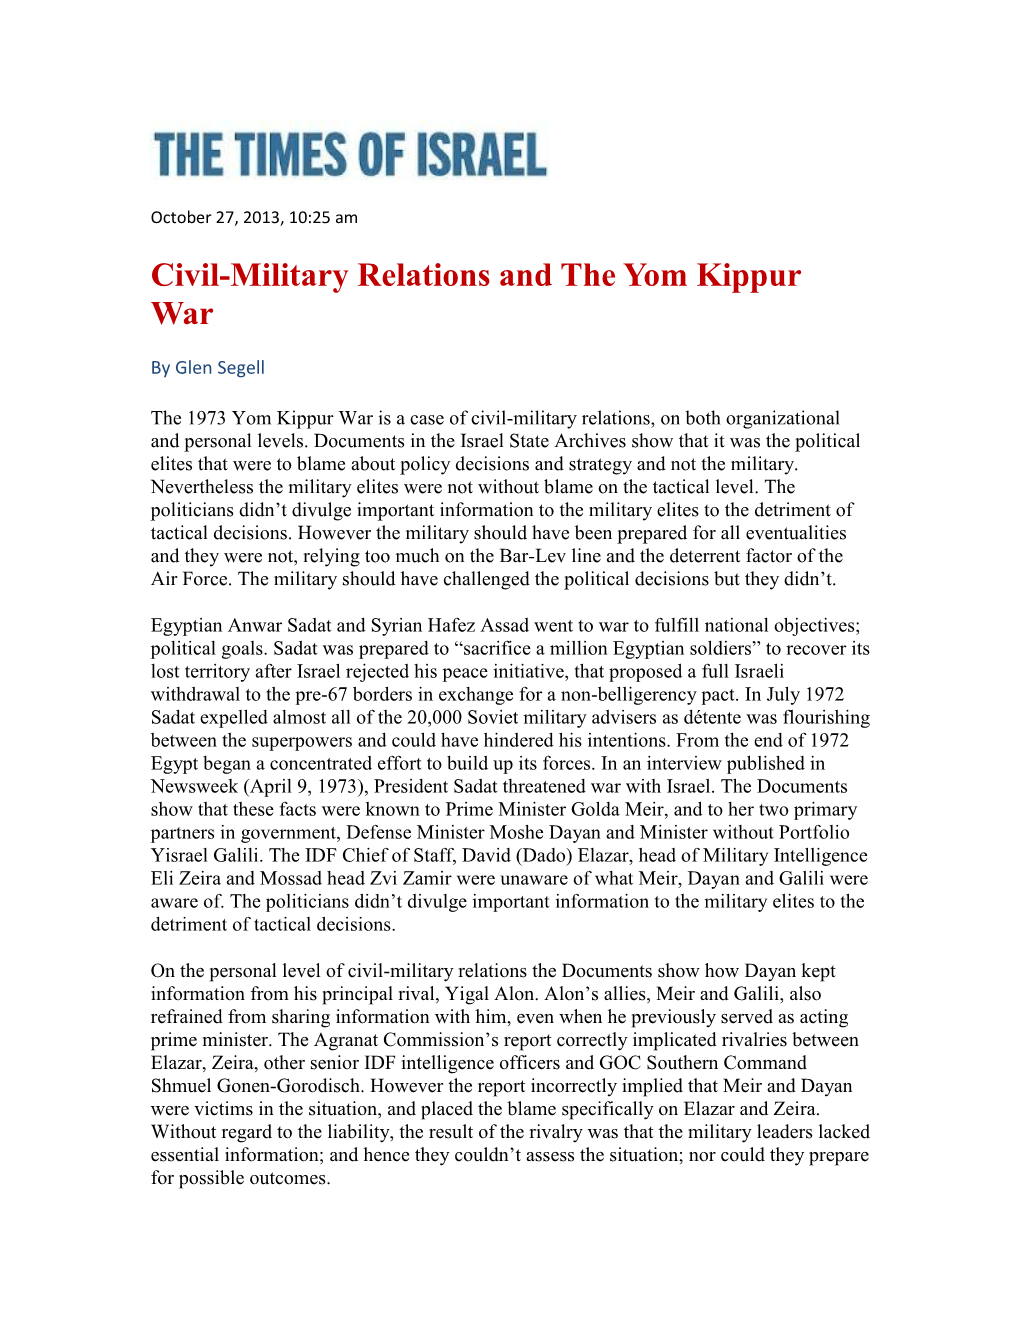 Civil-Military Relations and the Yom Kippur War